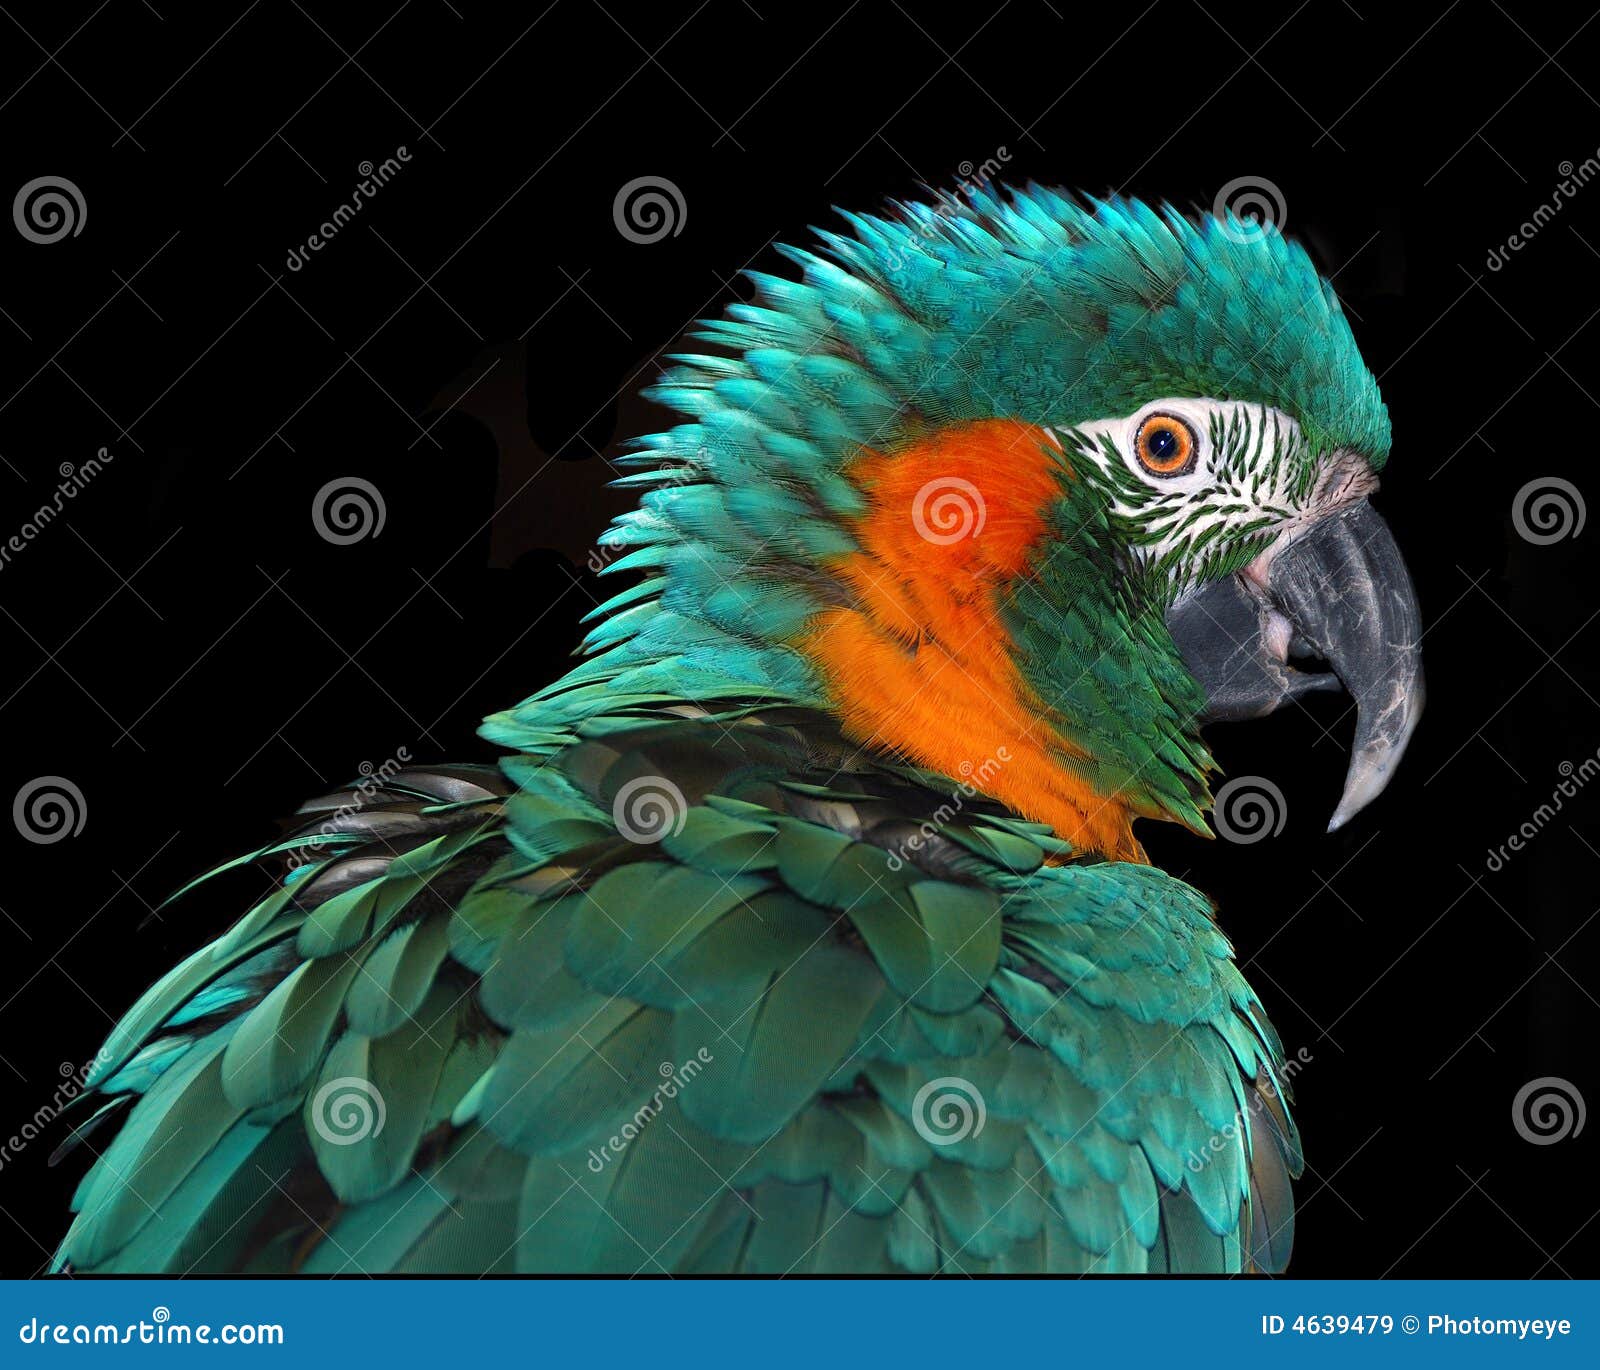 rare macaw